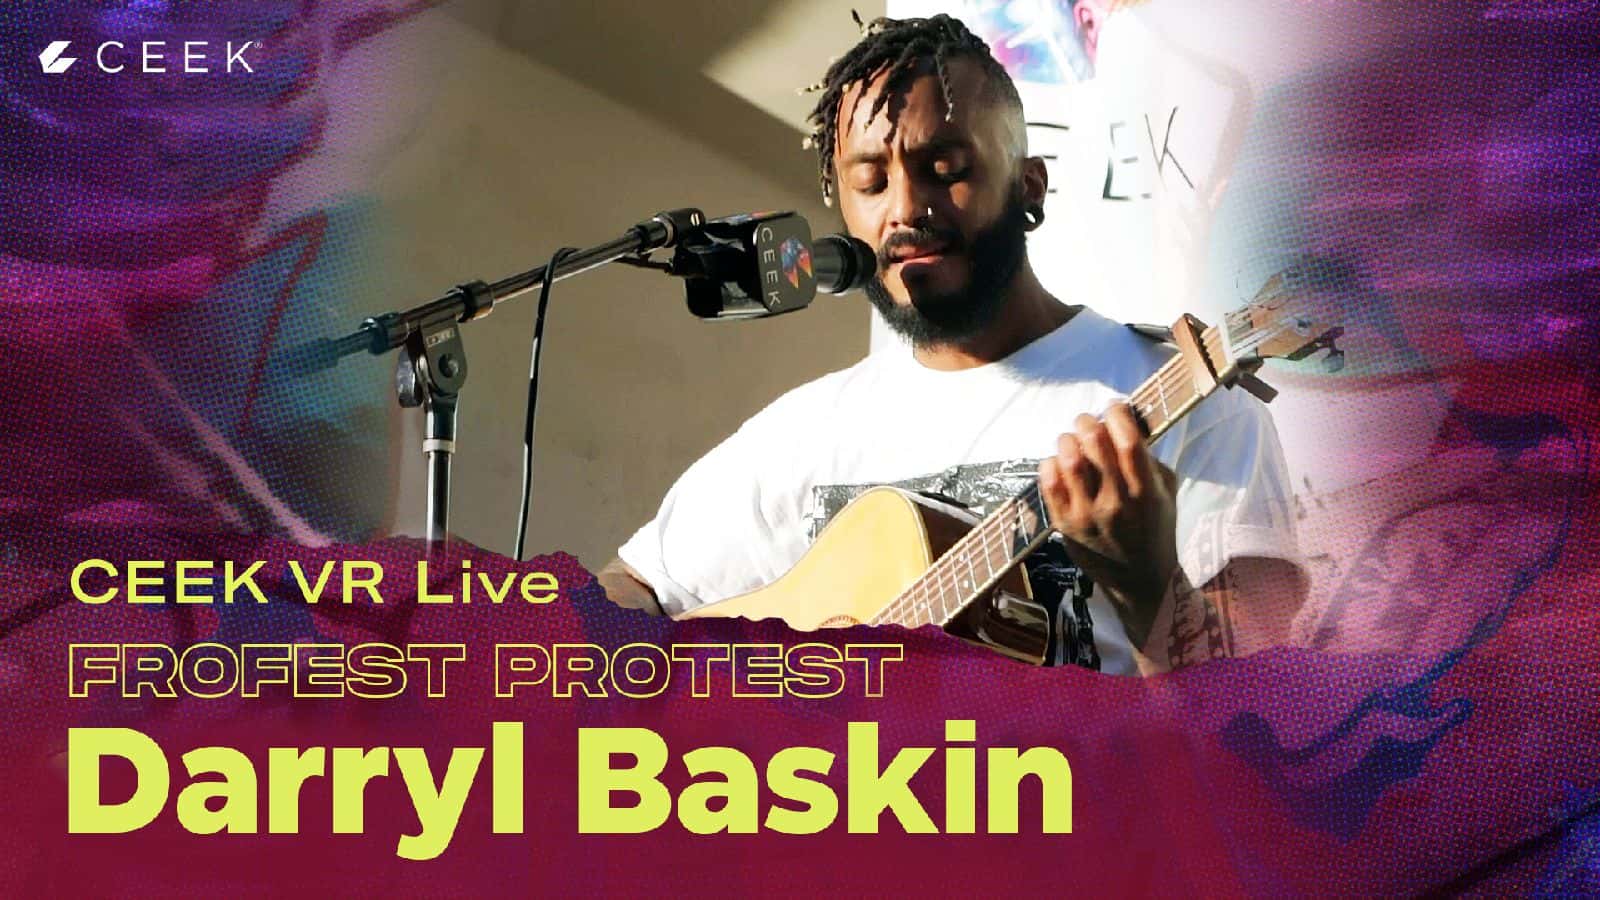 FROFEST Darryl Baskin Live